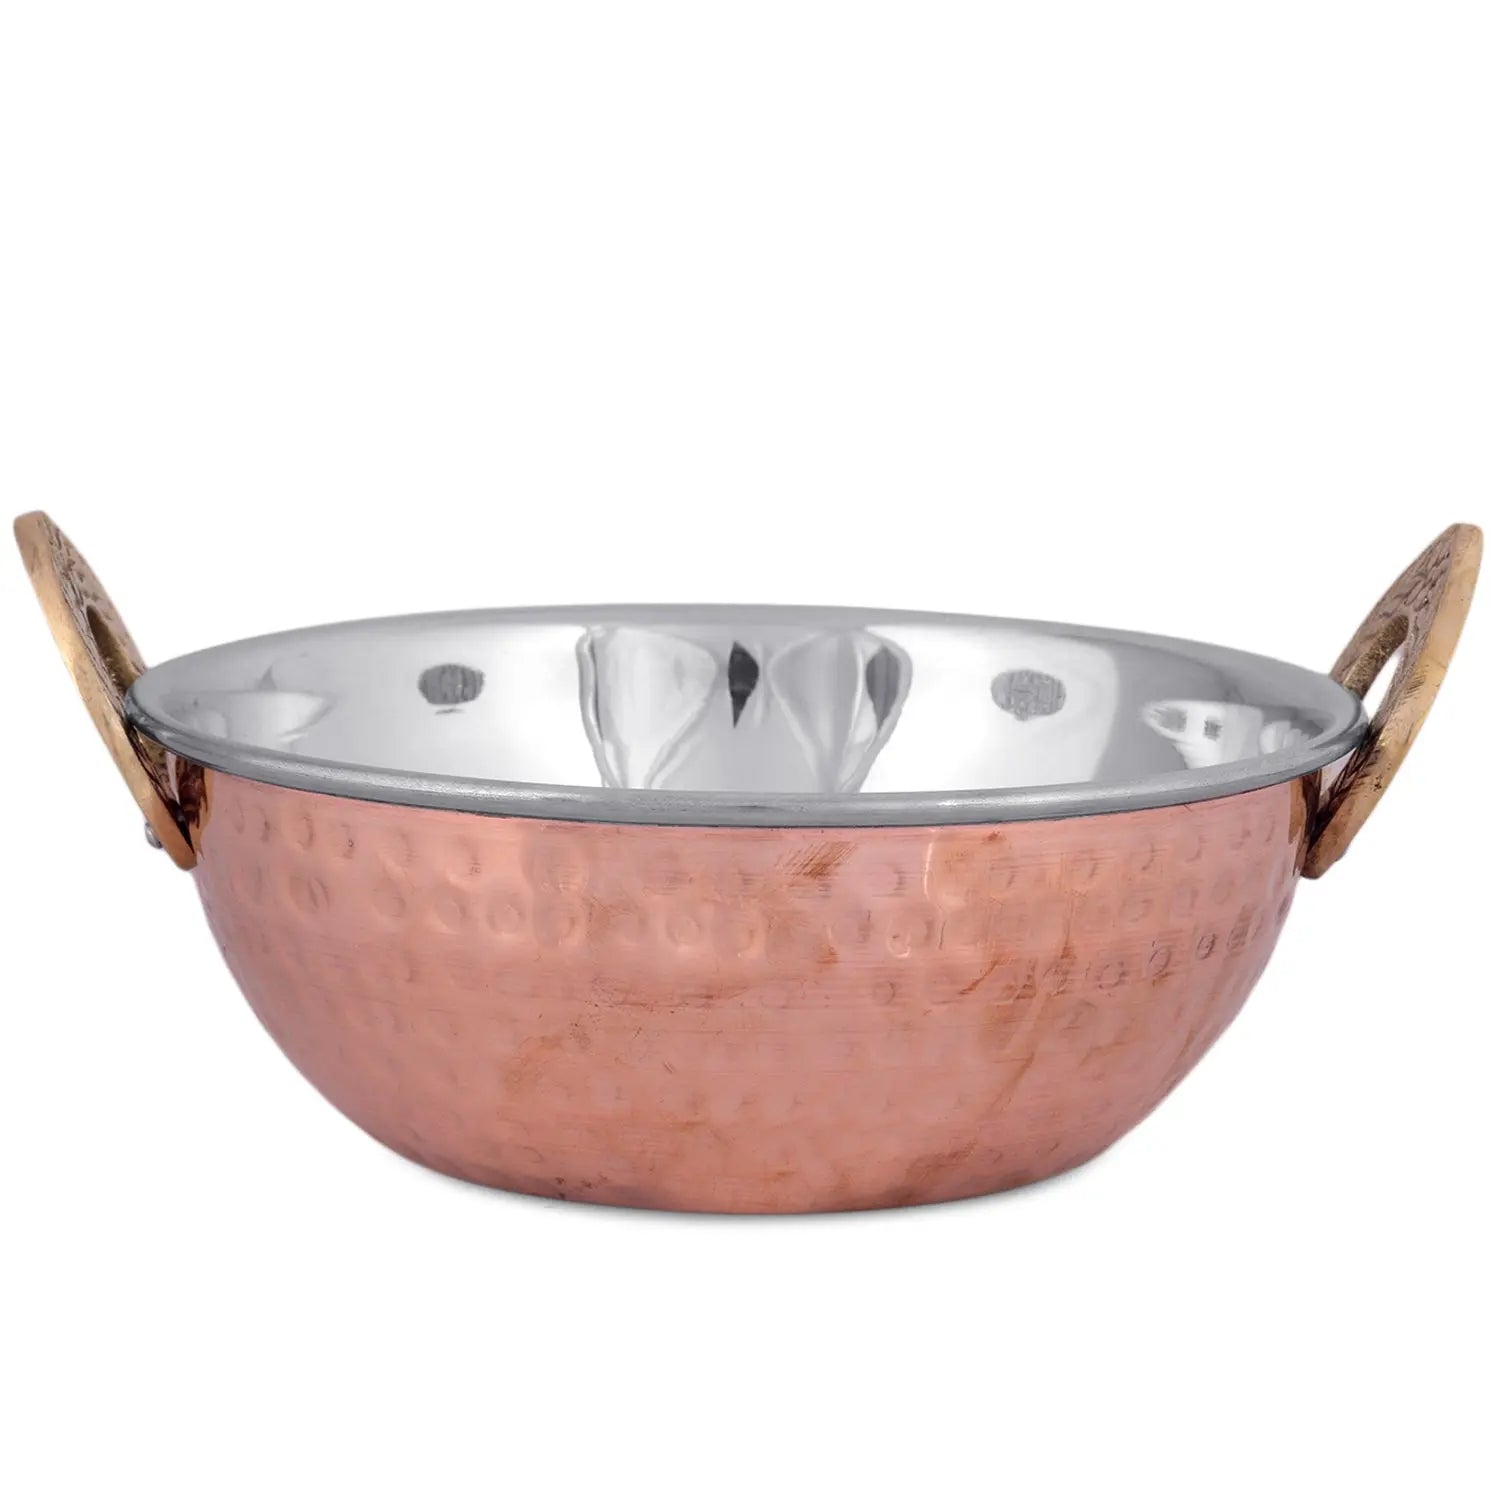 Crockery Wala And Company Steel Copper 1 Bucket Balti, 1 Handi Bowl, 1 Kadai, 1 Tava, Serveware Set, 4 Pcs - Crockery Wala And Company